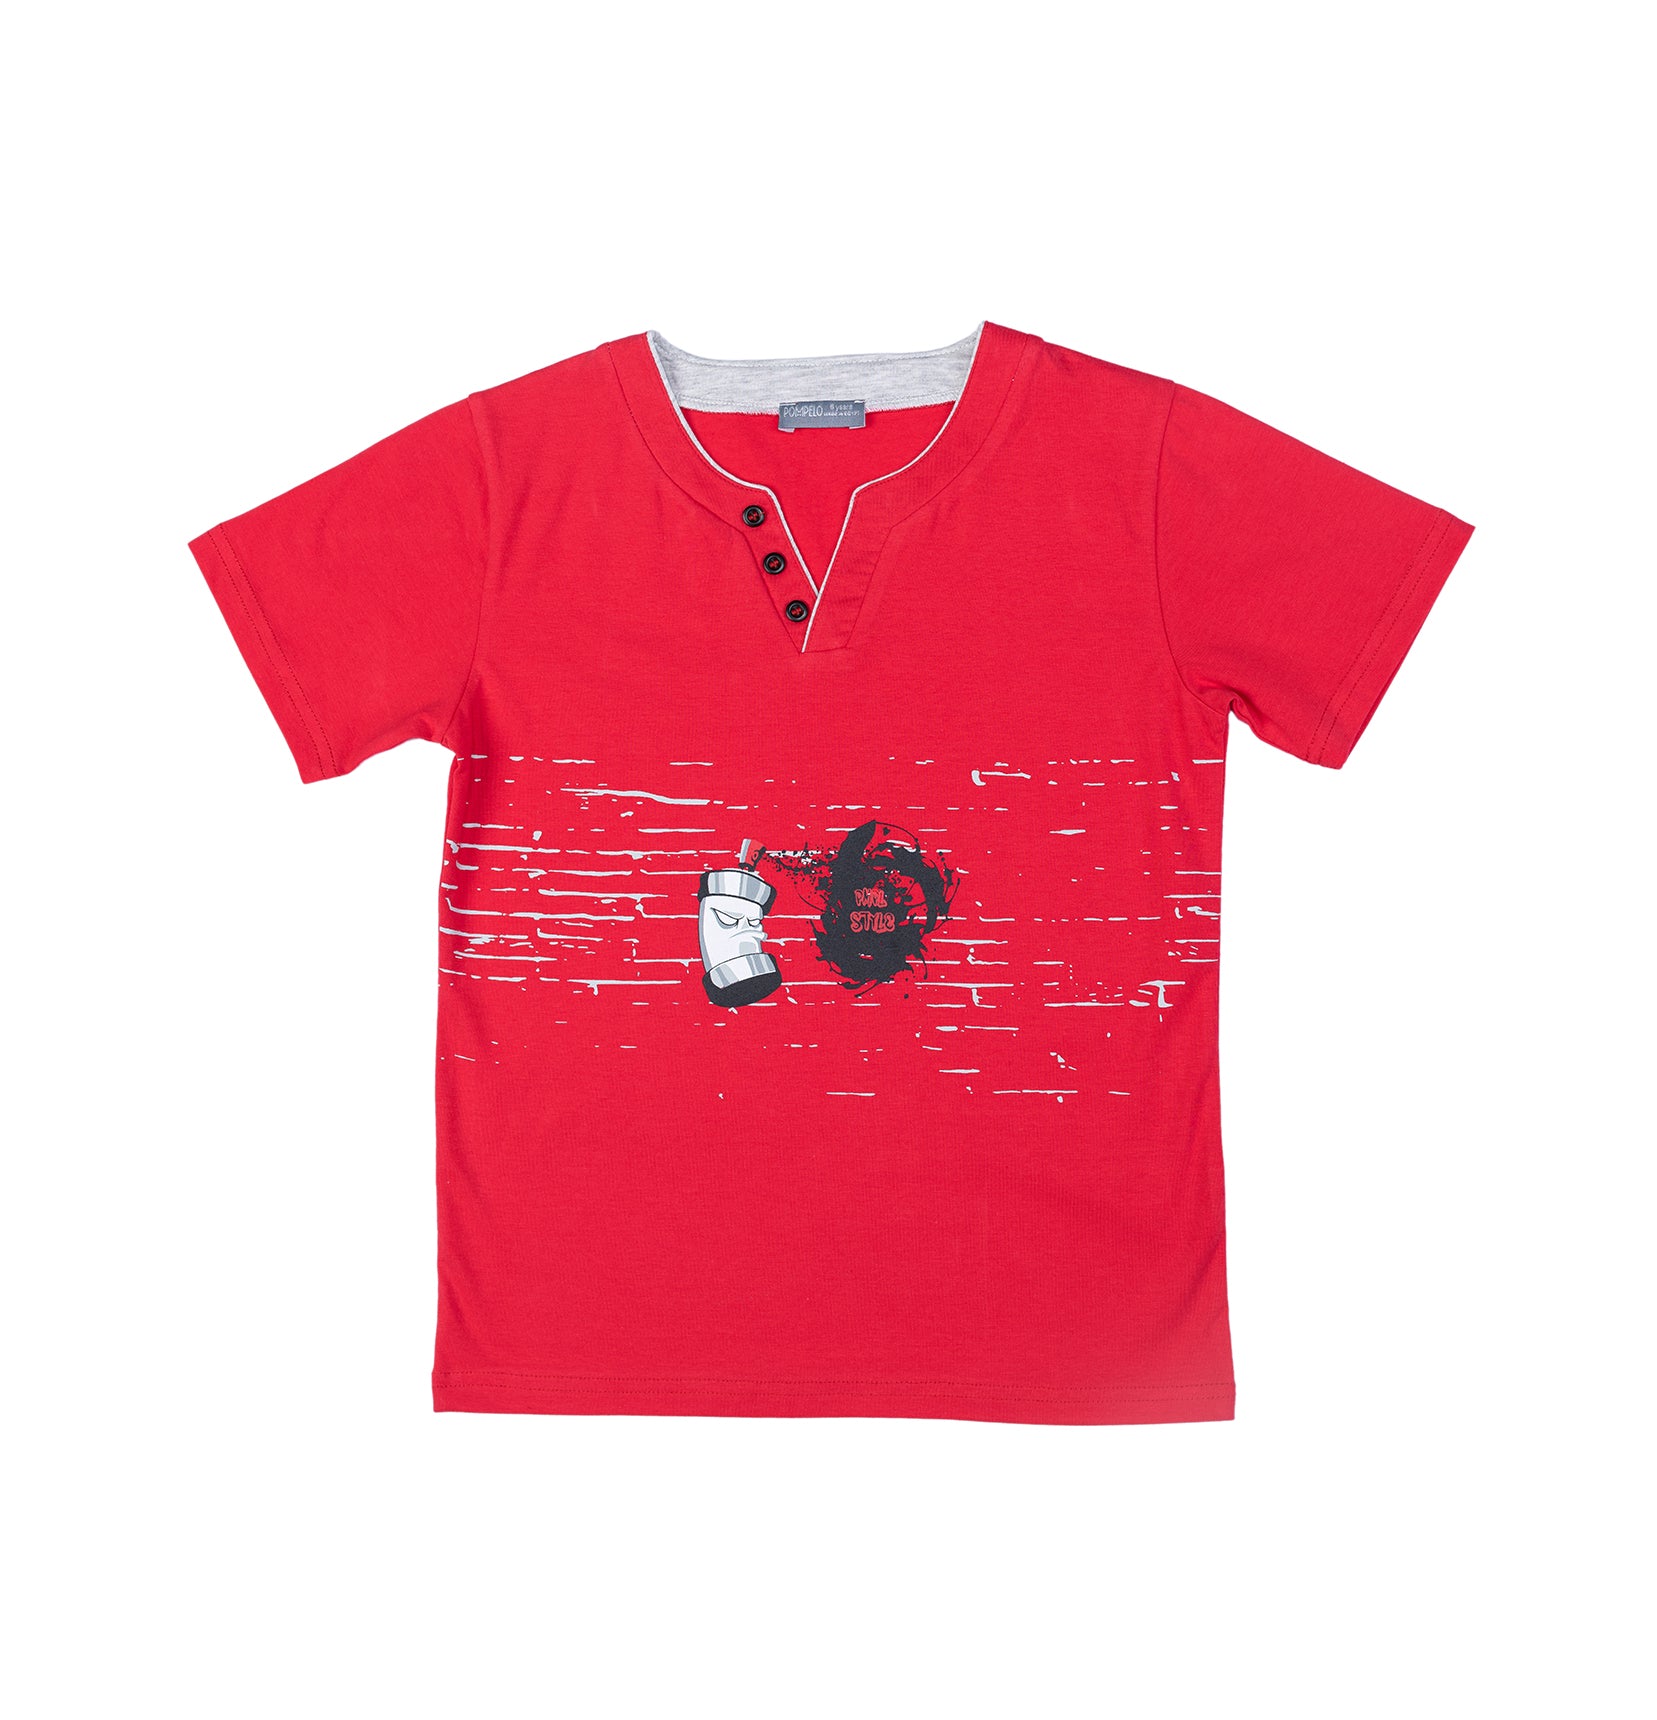 Trendy half sleeve cotton tshirt for boys by Pompelo